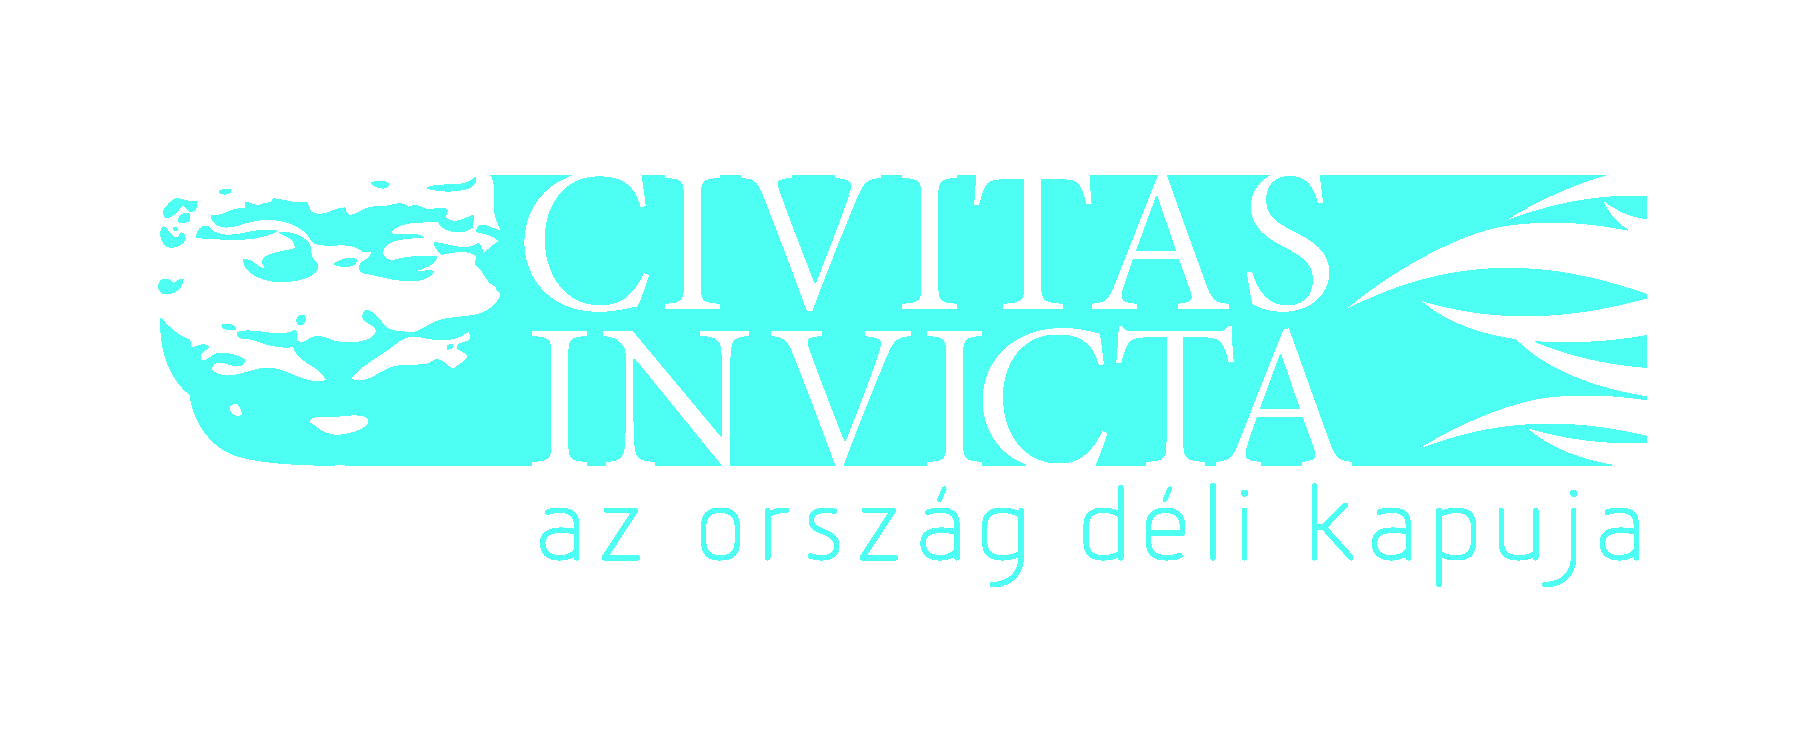 civitasinvicta_final_logo-01.jpg